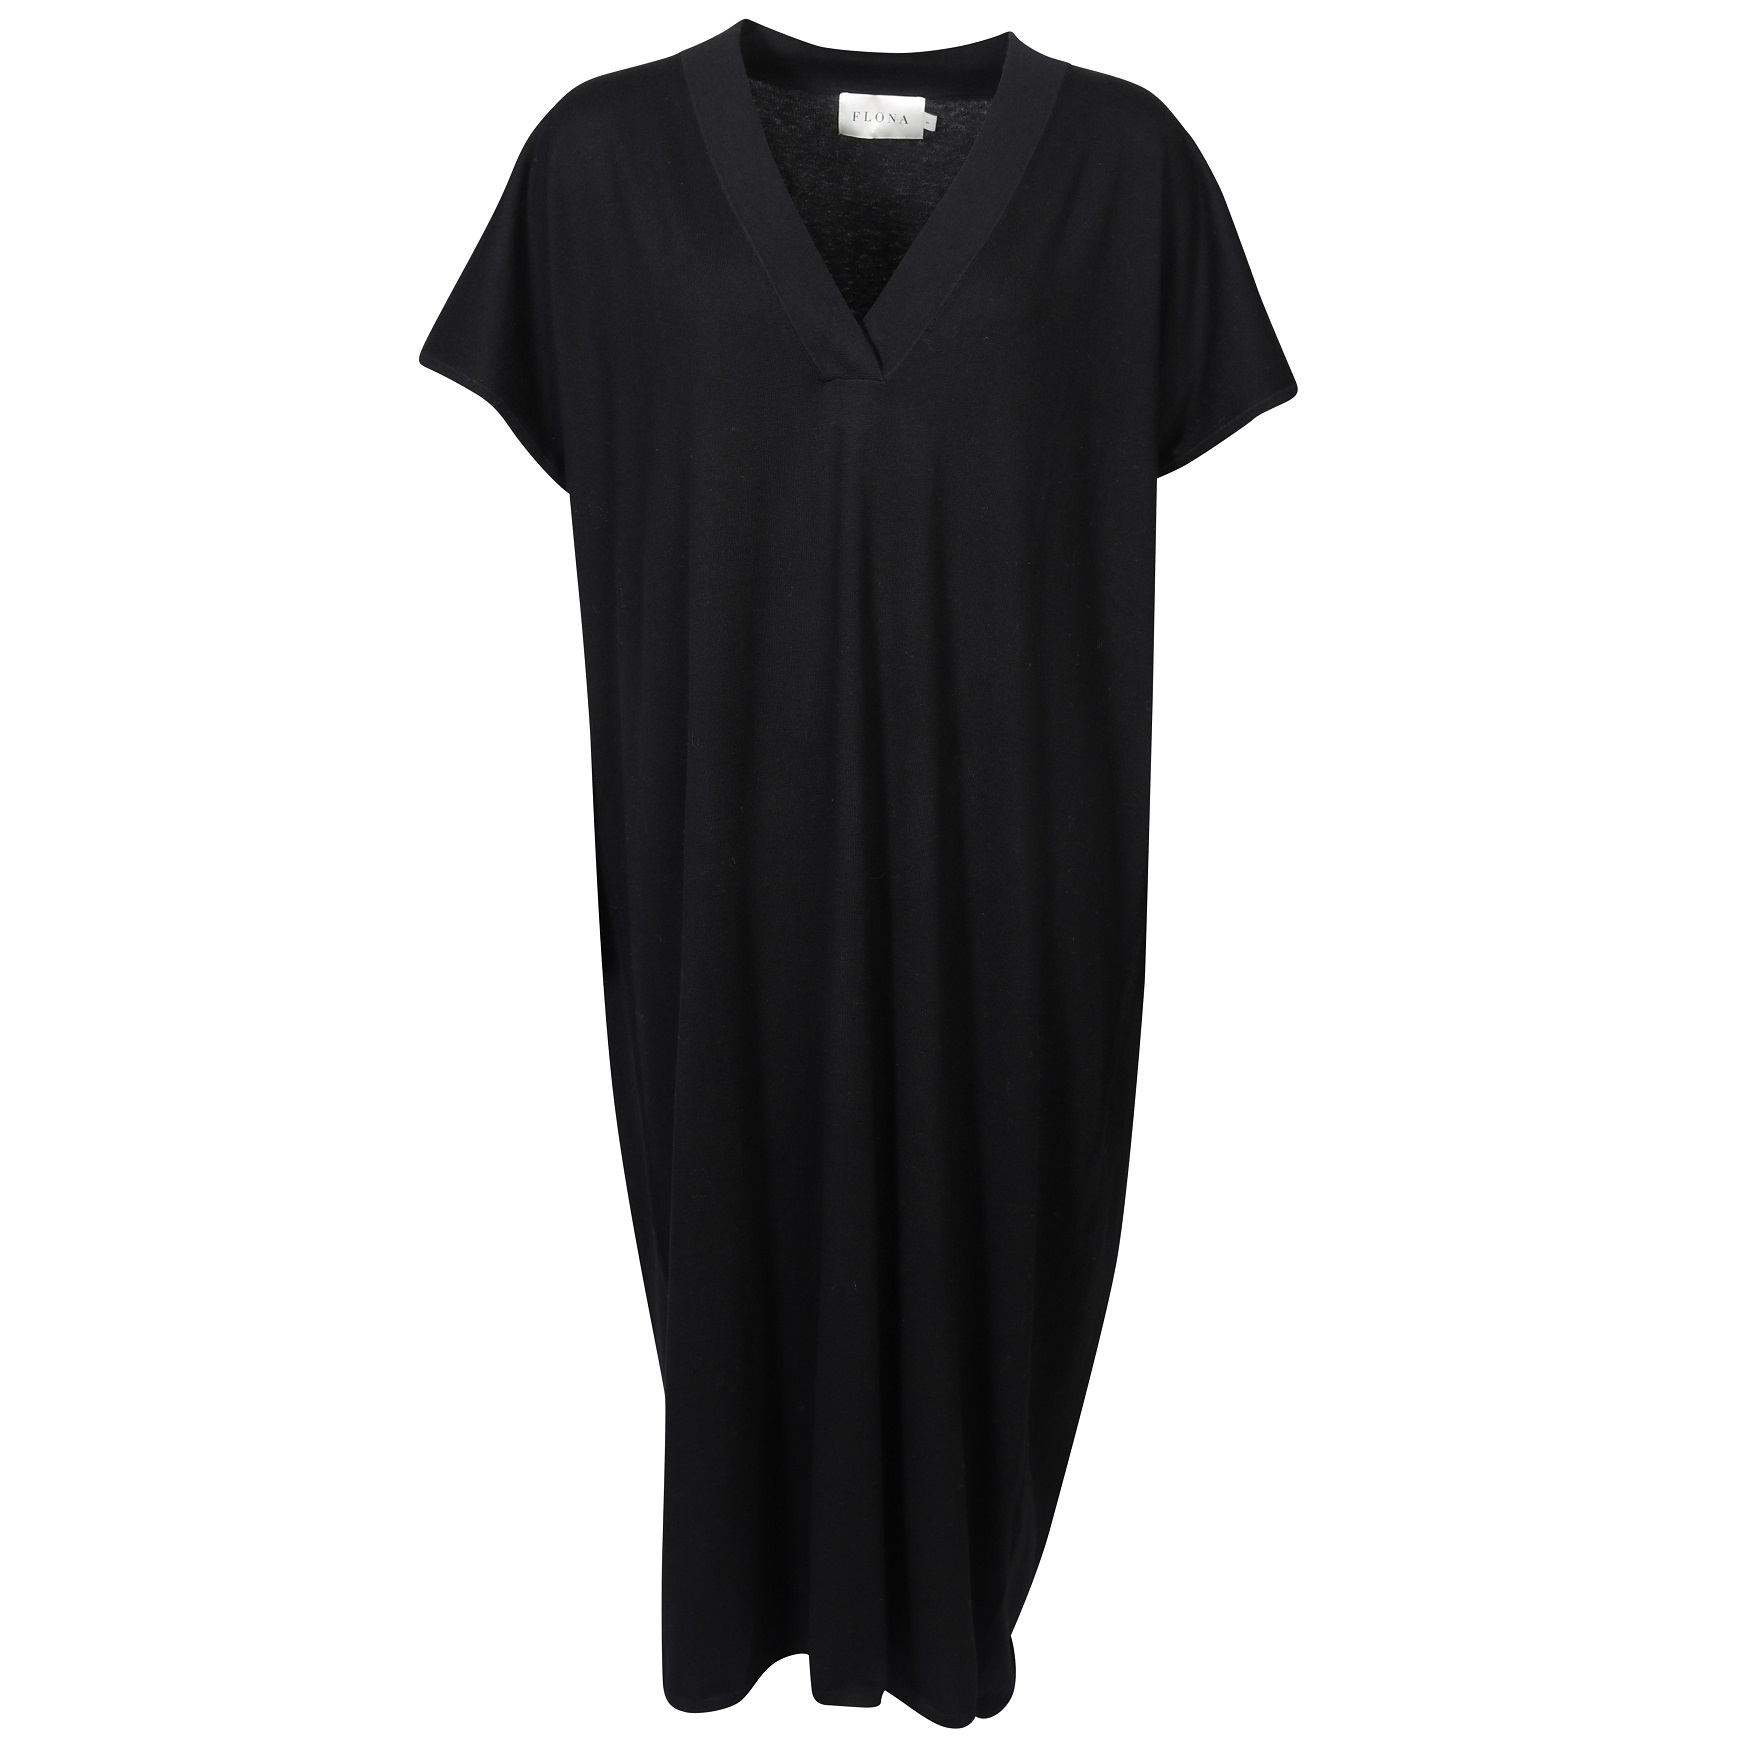 FLONA Knit Dress in Black L